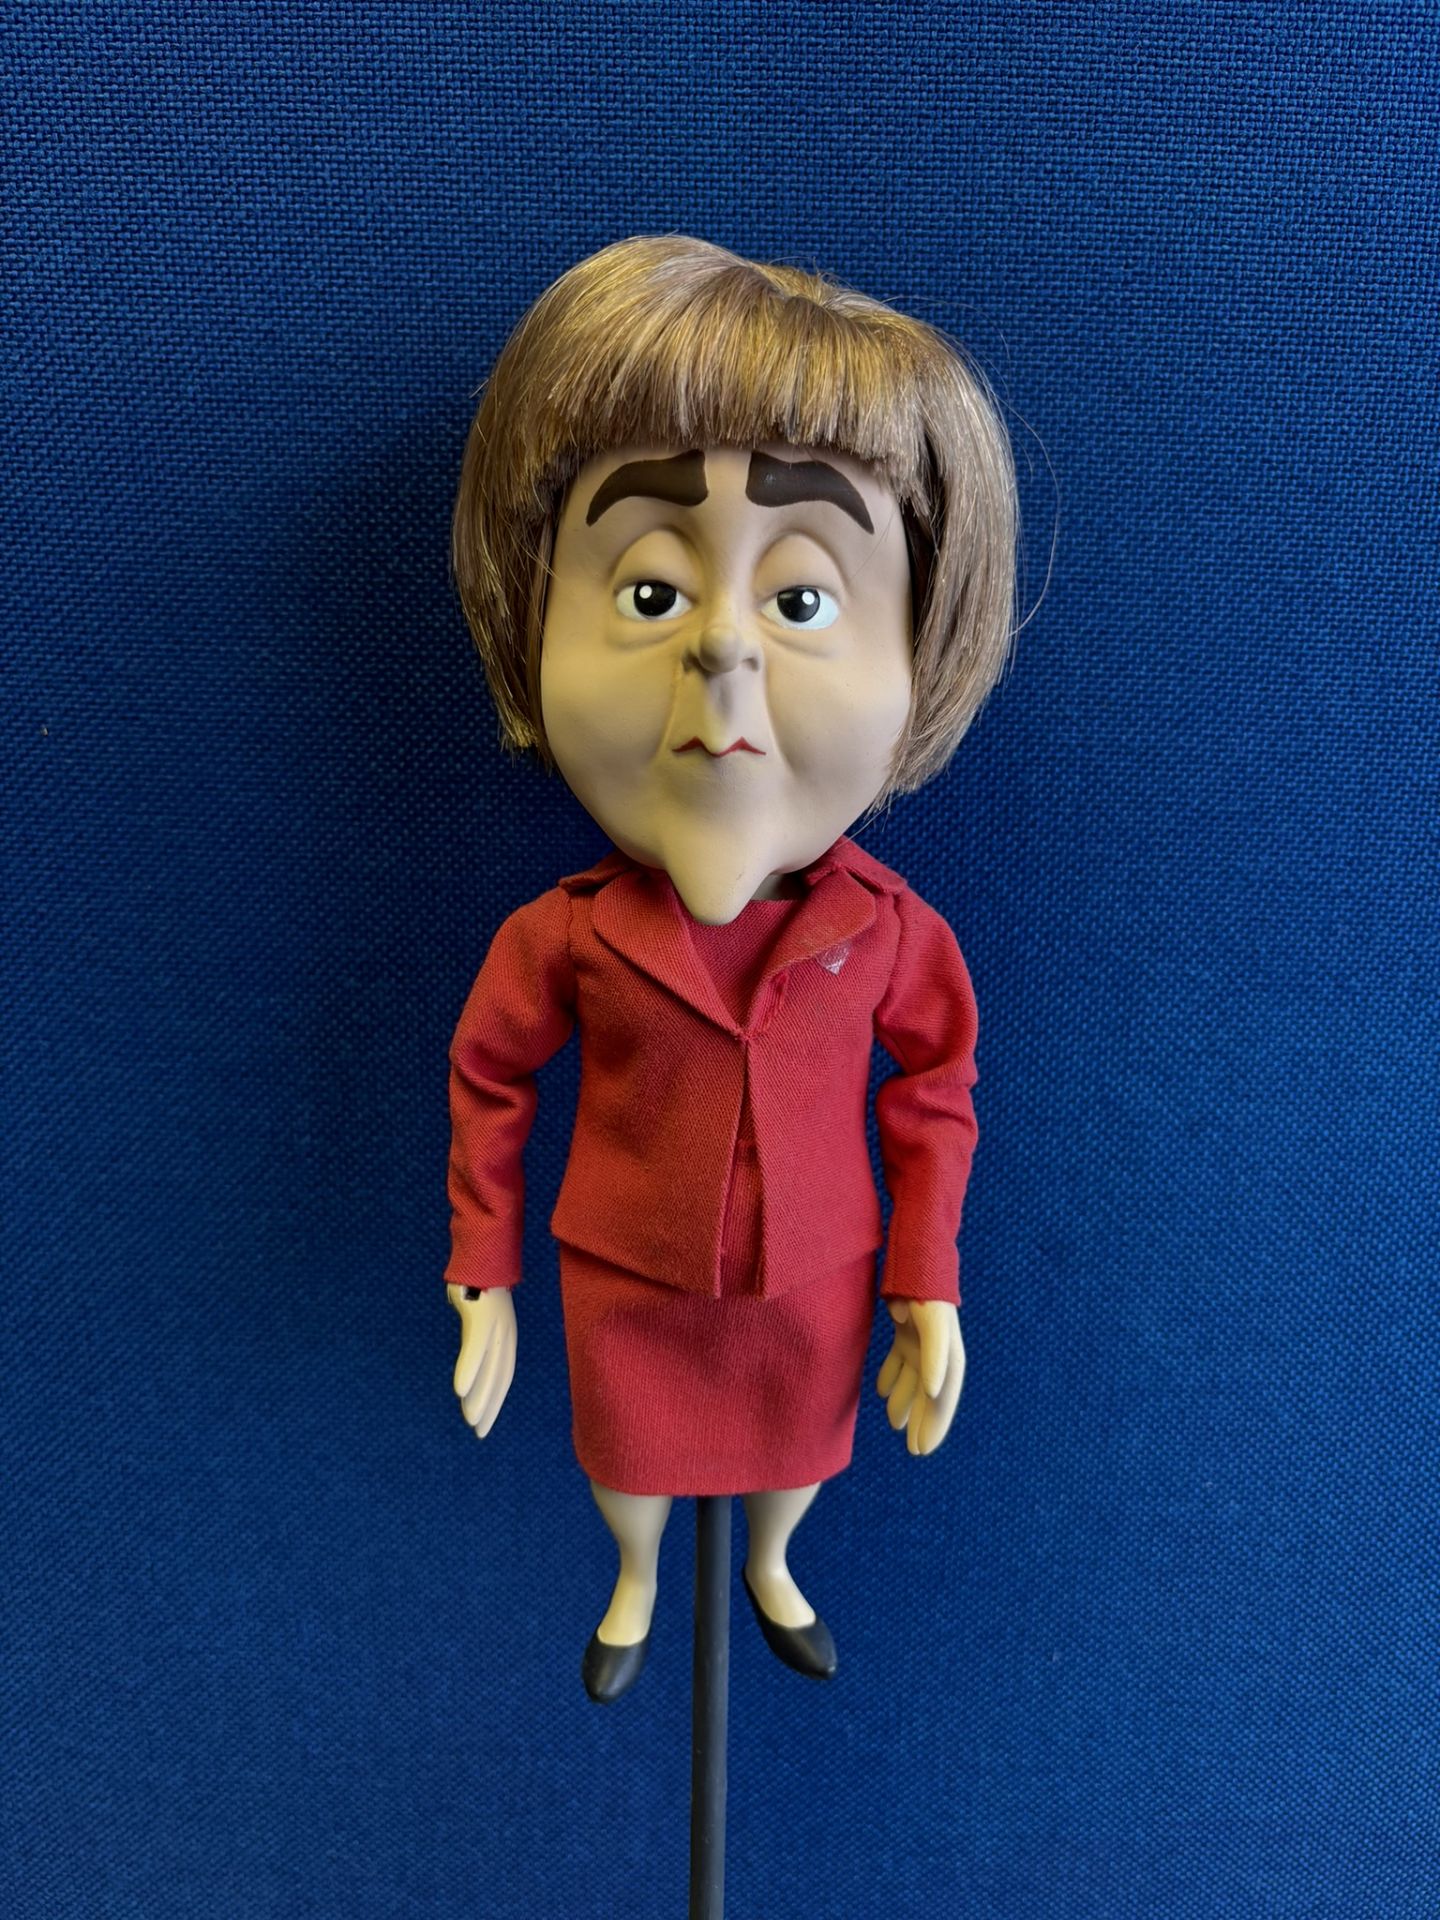 Newzoid puppet - Nicola Sturgeon - Image 2 of 3